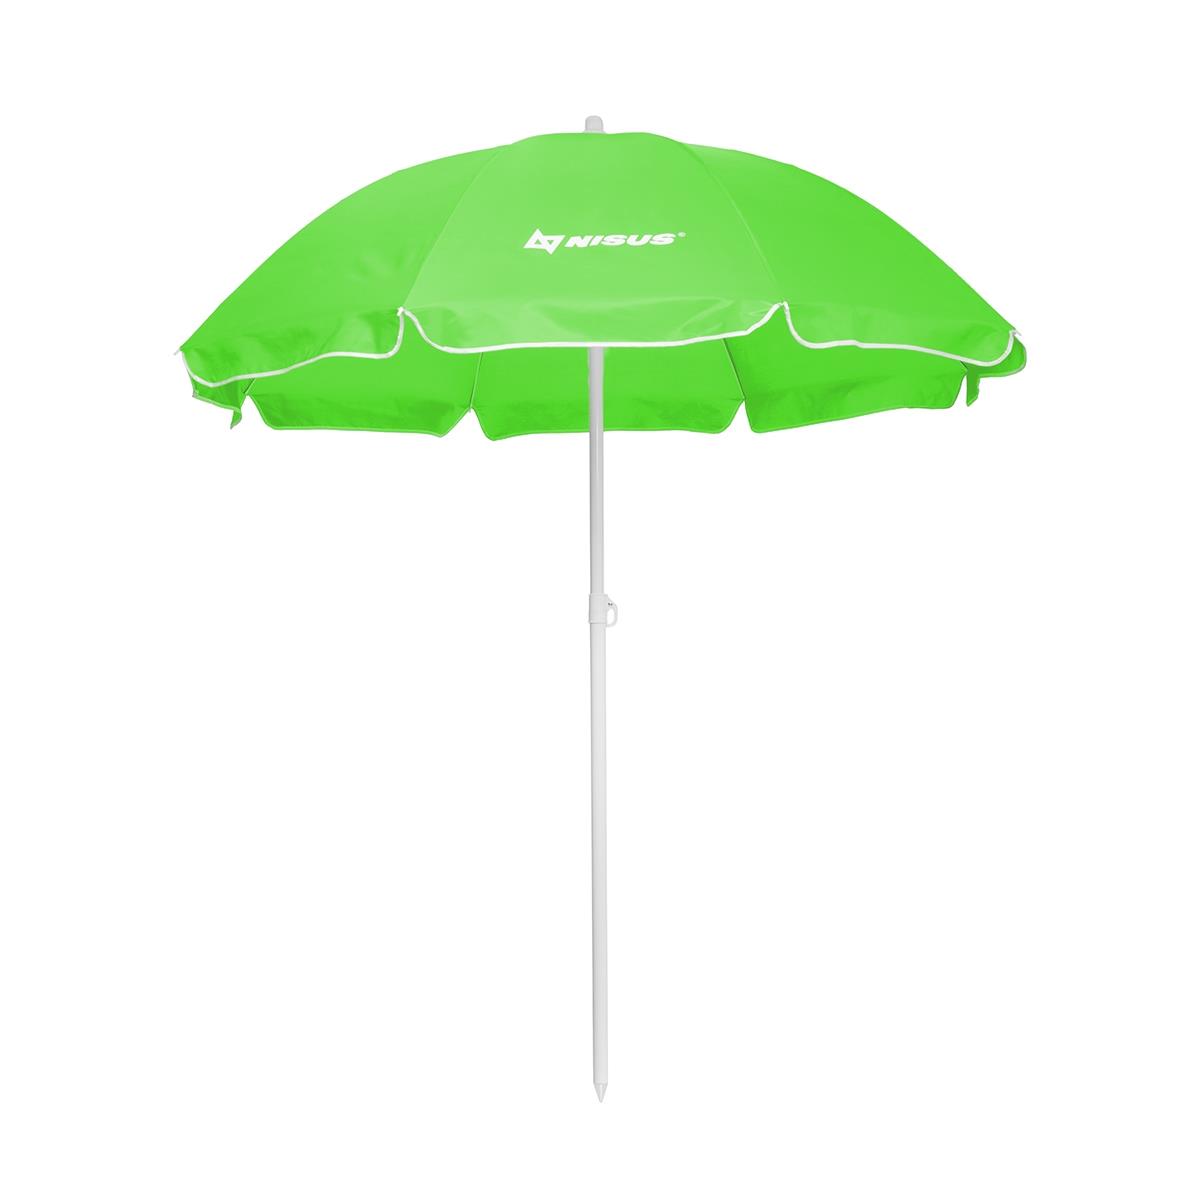 Зонт пляжный d 2,00м прямой зеленый (28/32/210D) NA-200-G Nisus зонт пляжный d 2 4м с наклоном 28 32 210d na 240n lg nisus